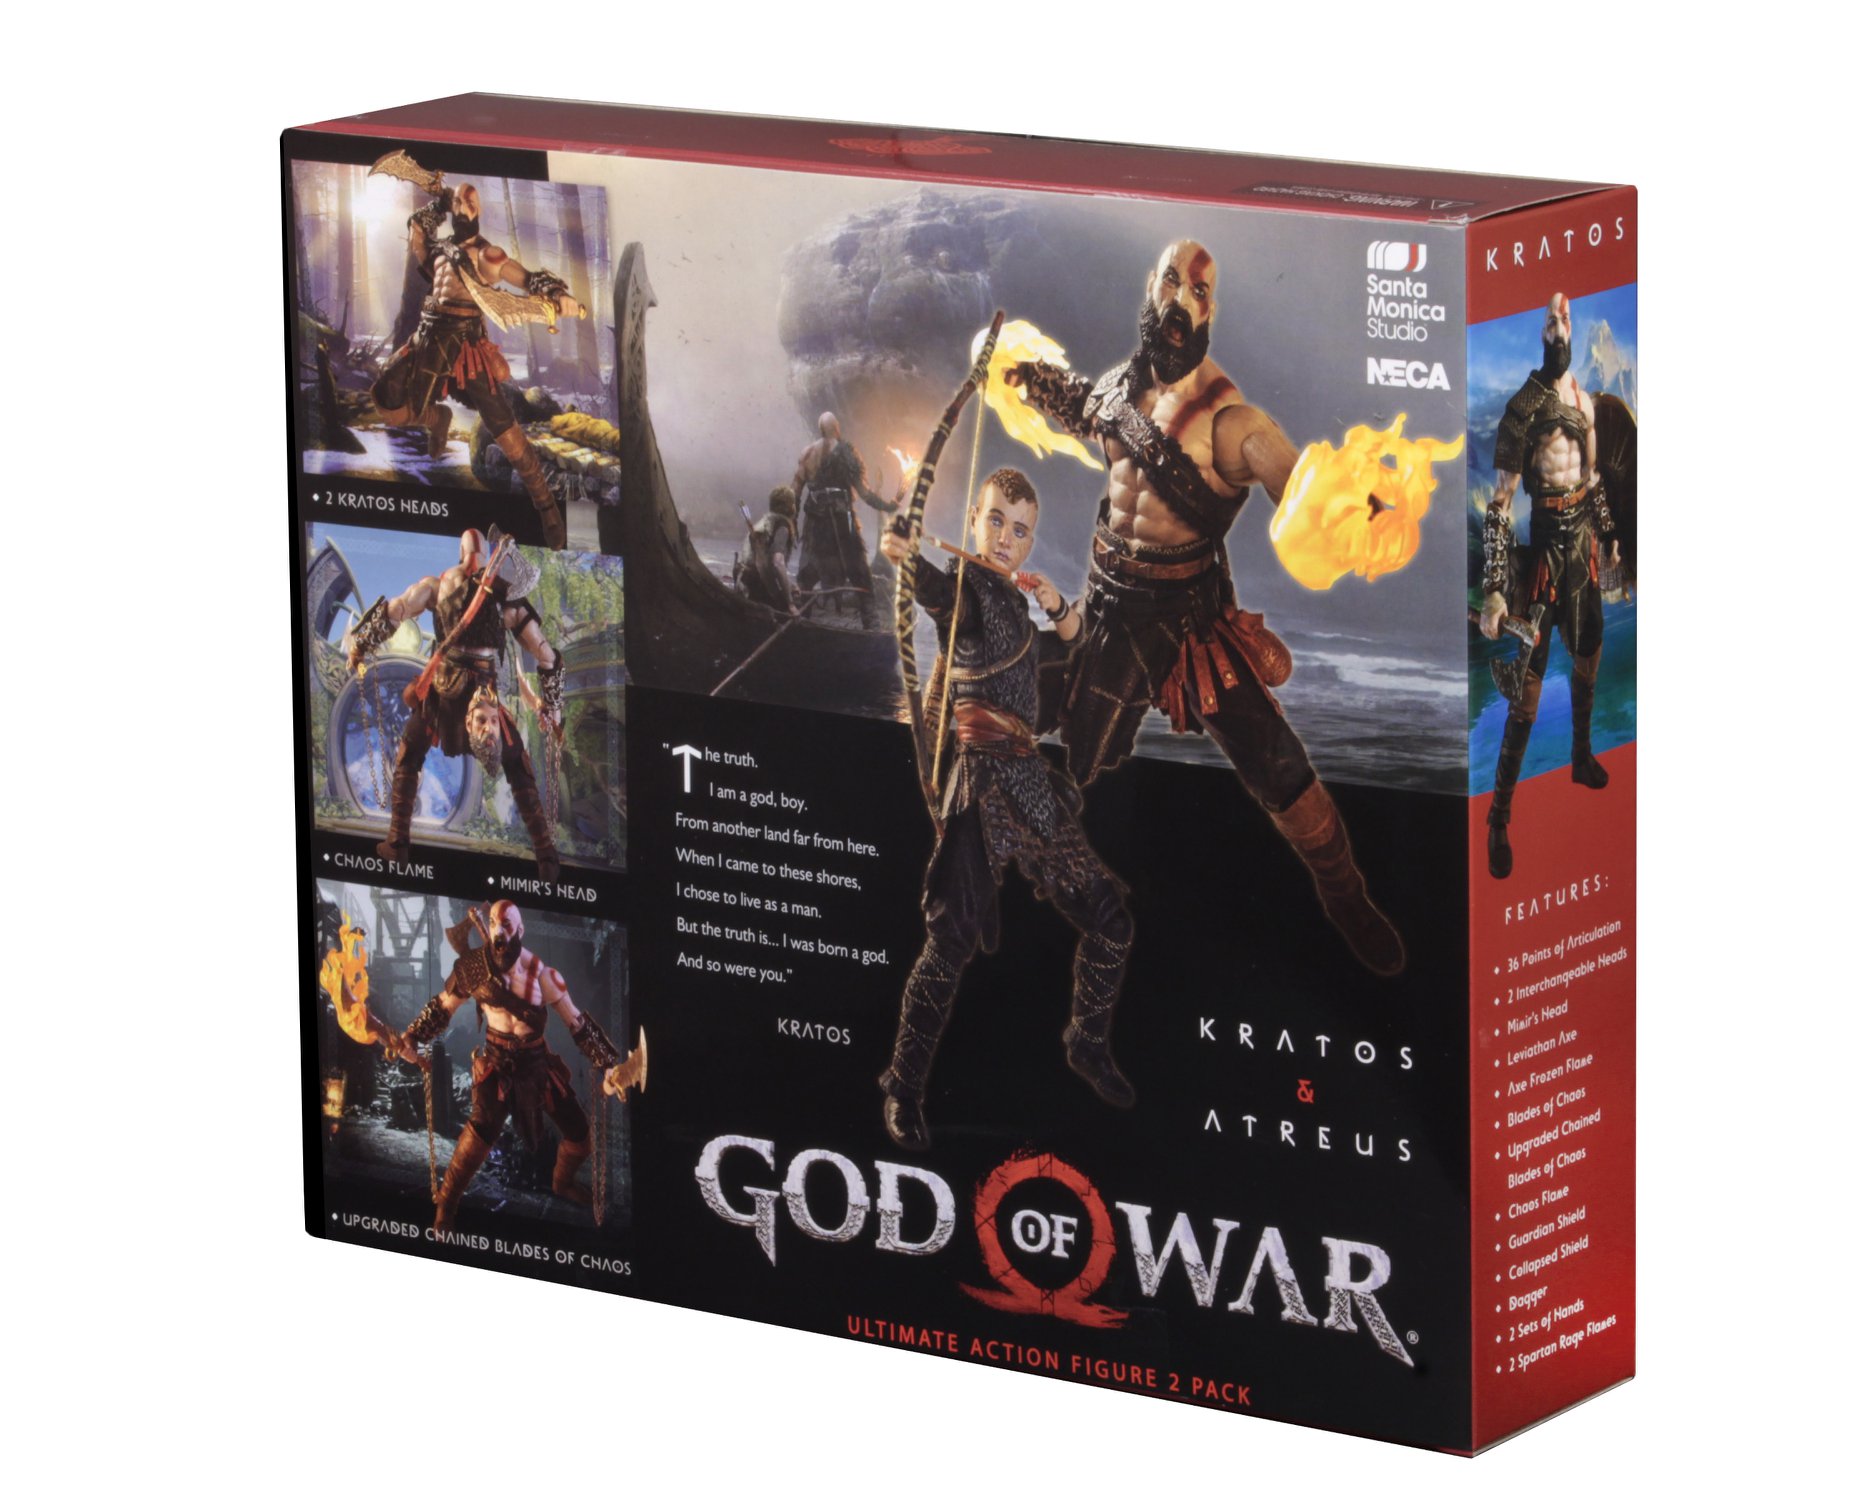 NECA-God-of-War-2-Pack-Box-002.jpg